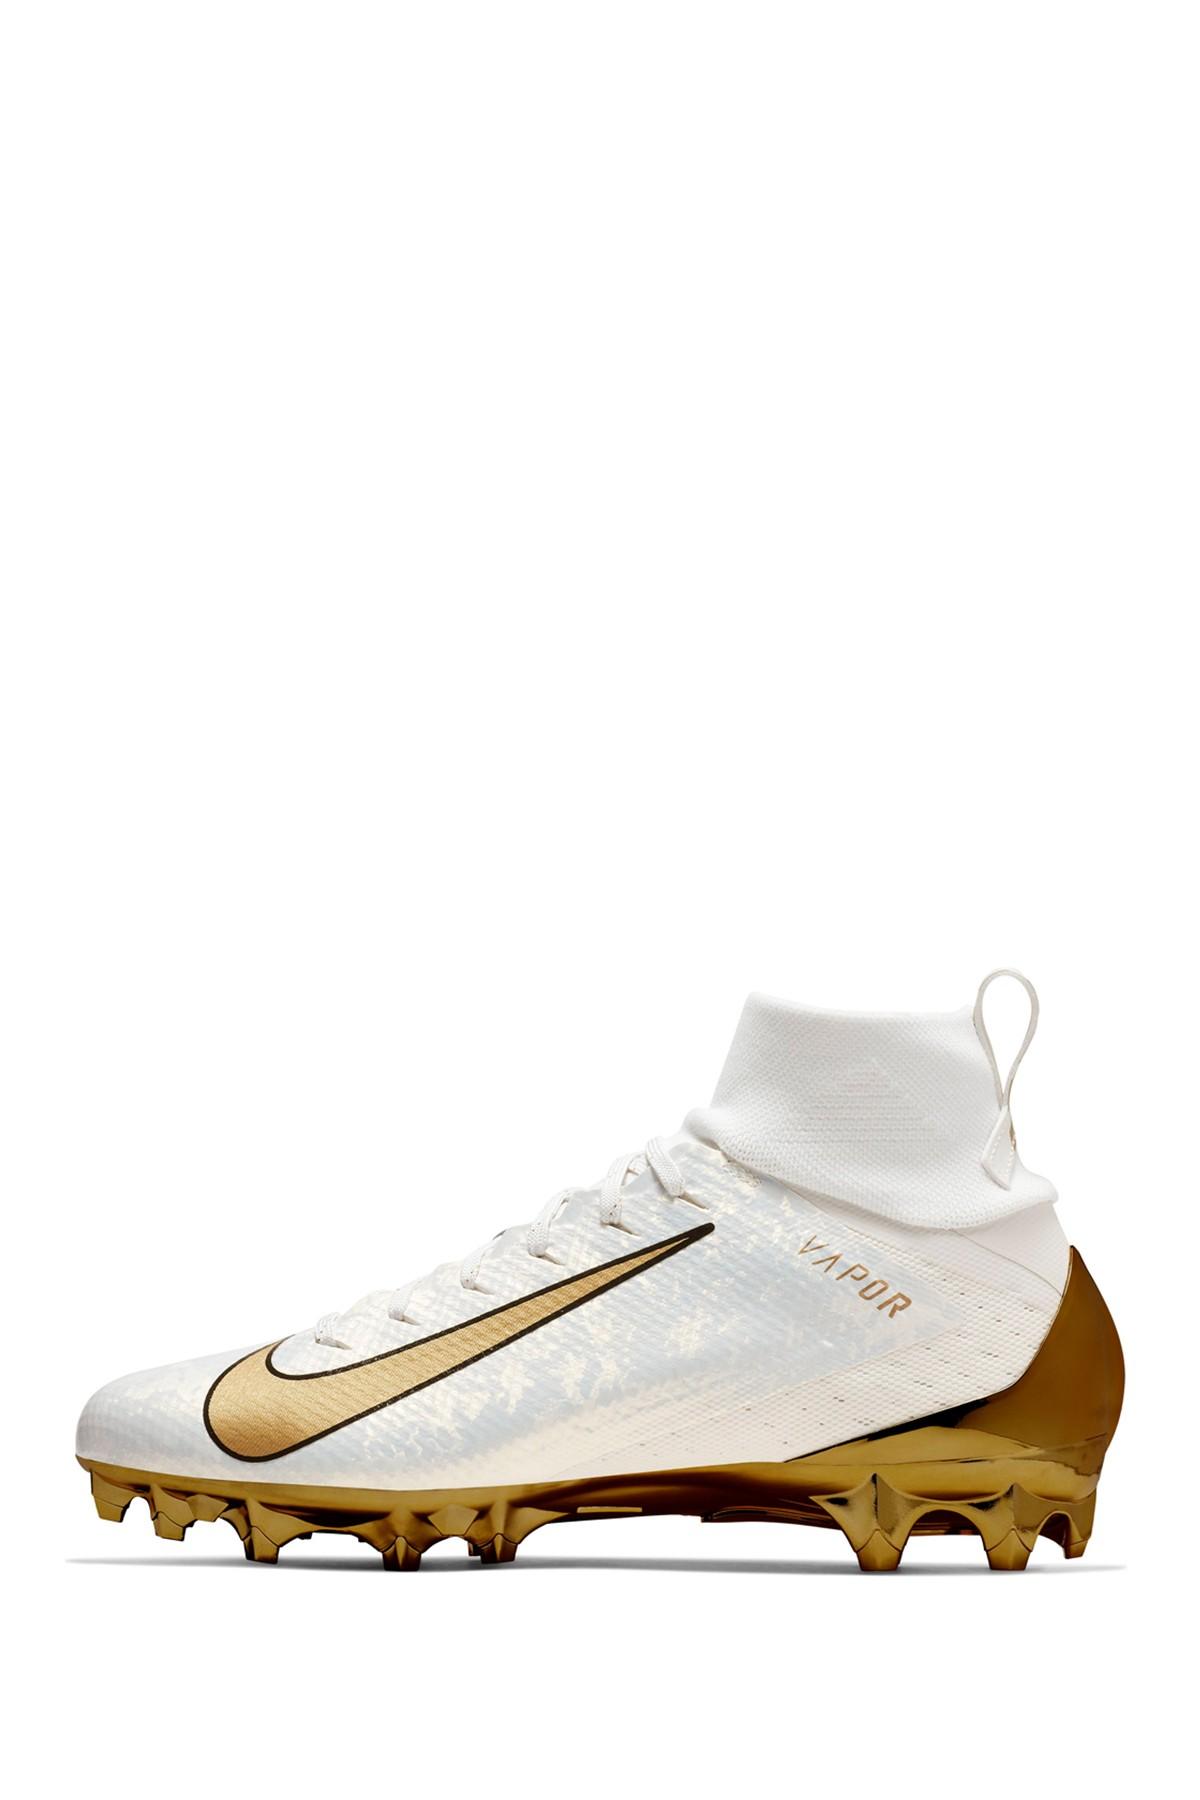 nike vapor untouchable pro 3 metallic gold men's football cleat shoes